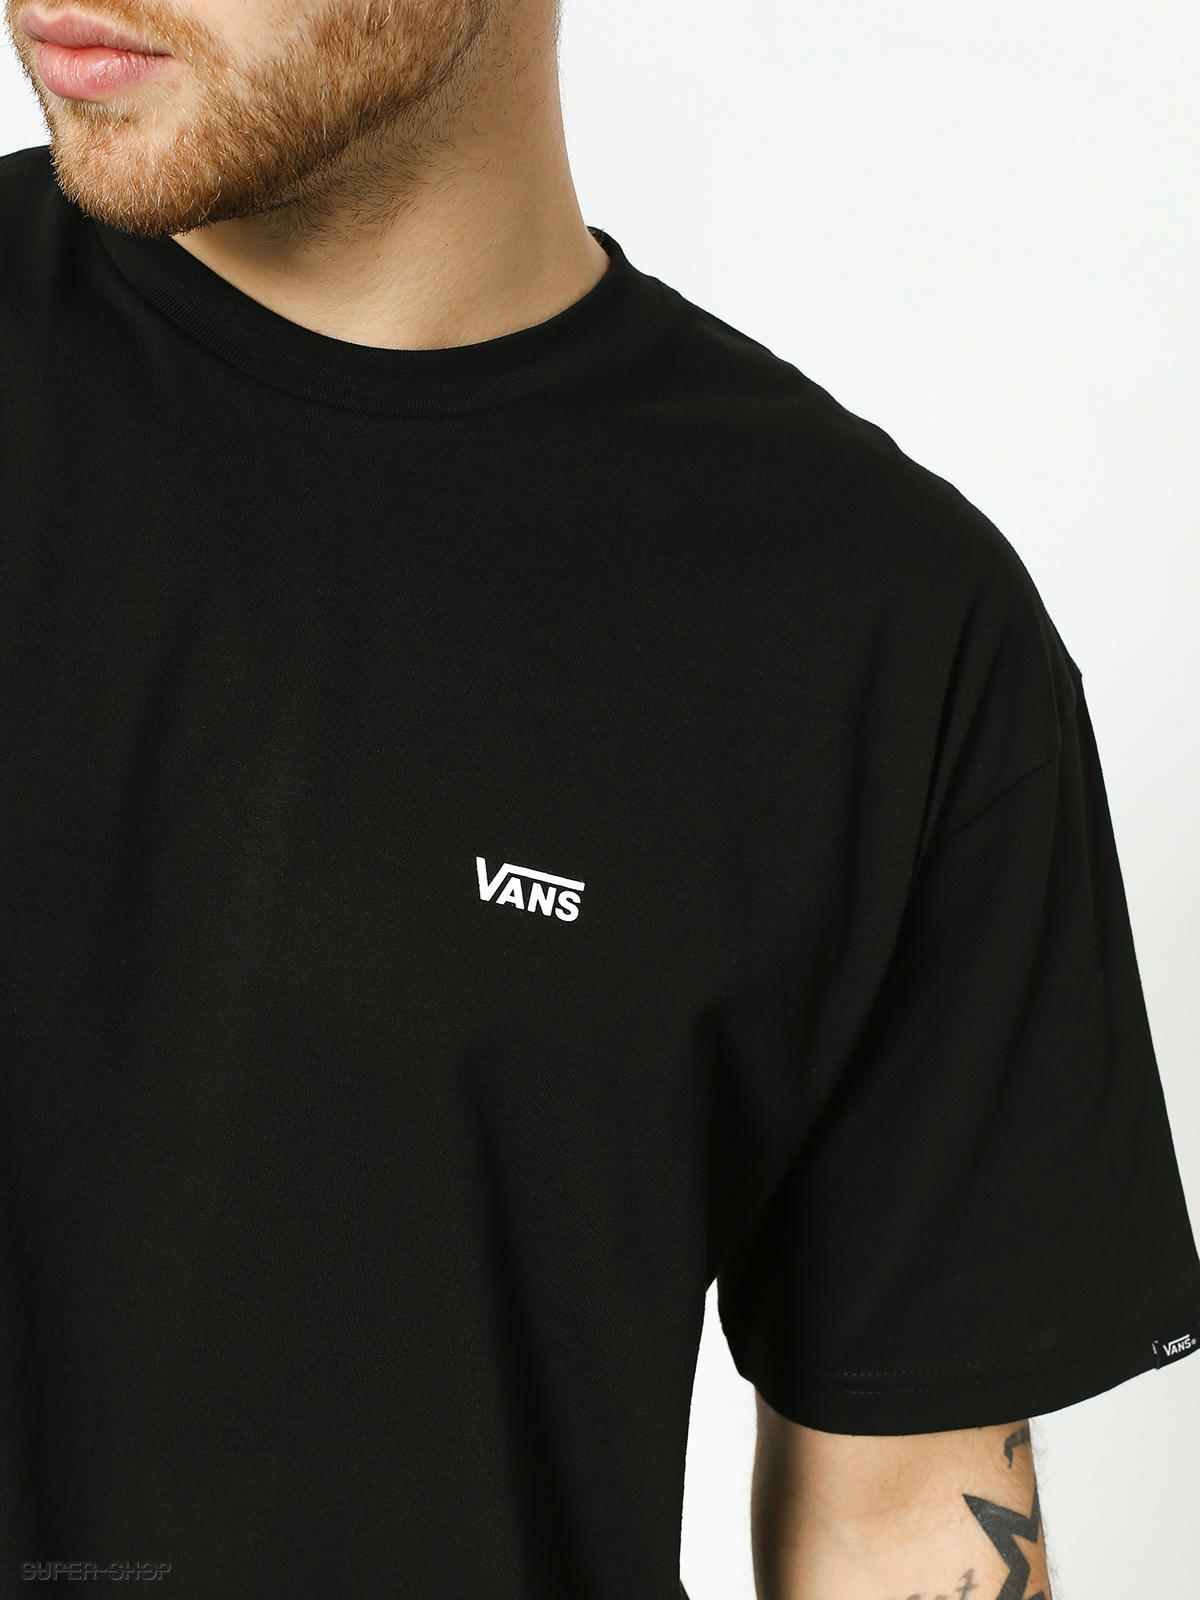 Som regel National folketælling Ledelse Vans Left Chest Logo T-shirt (black/white)